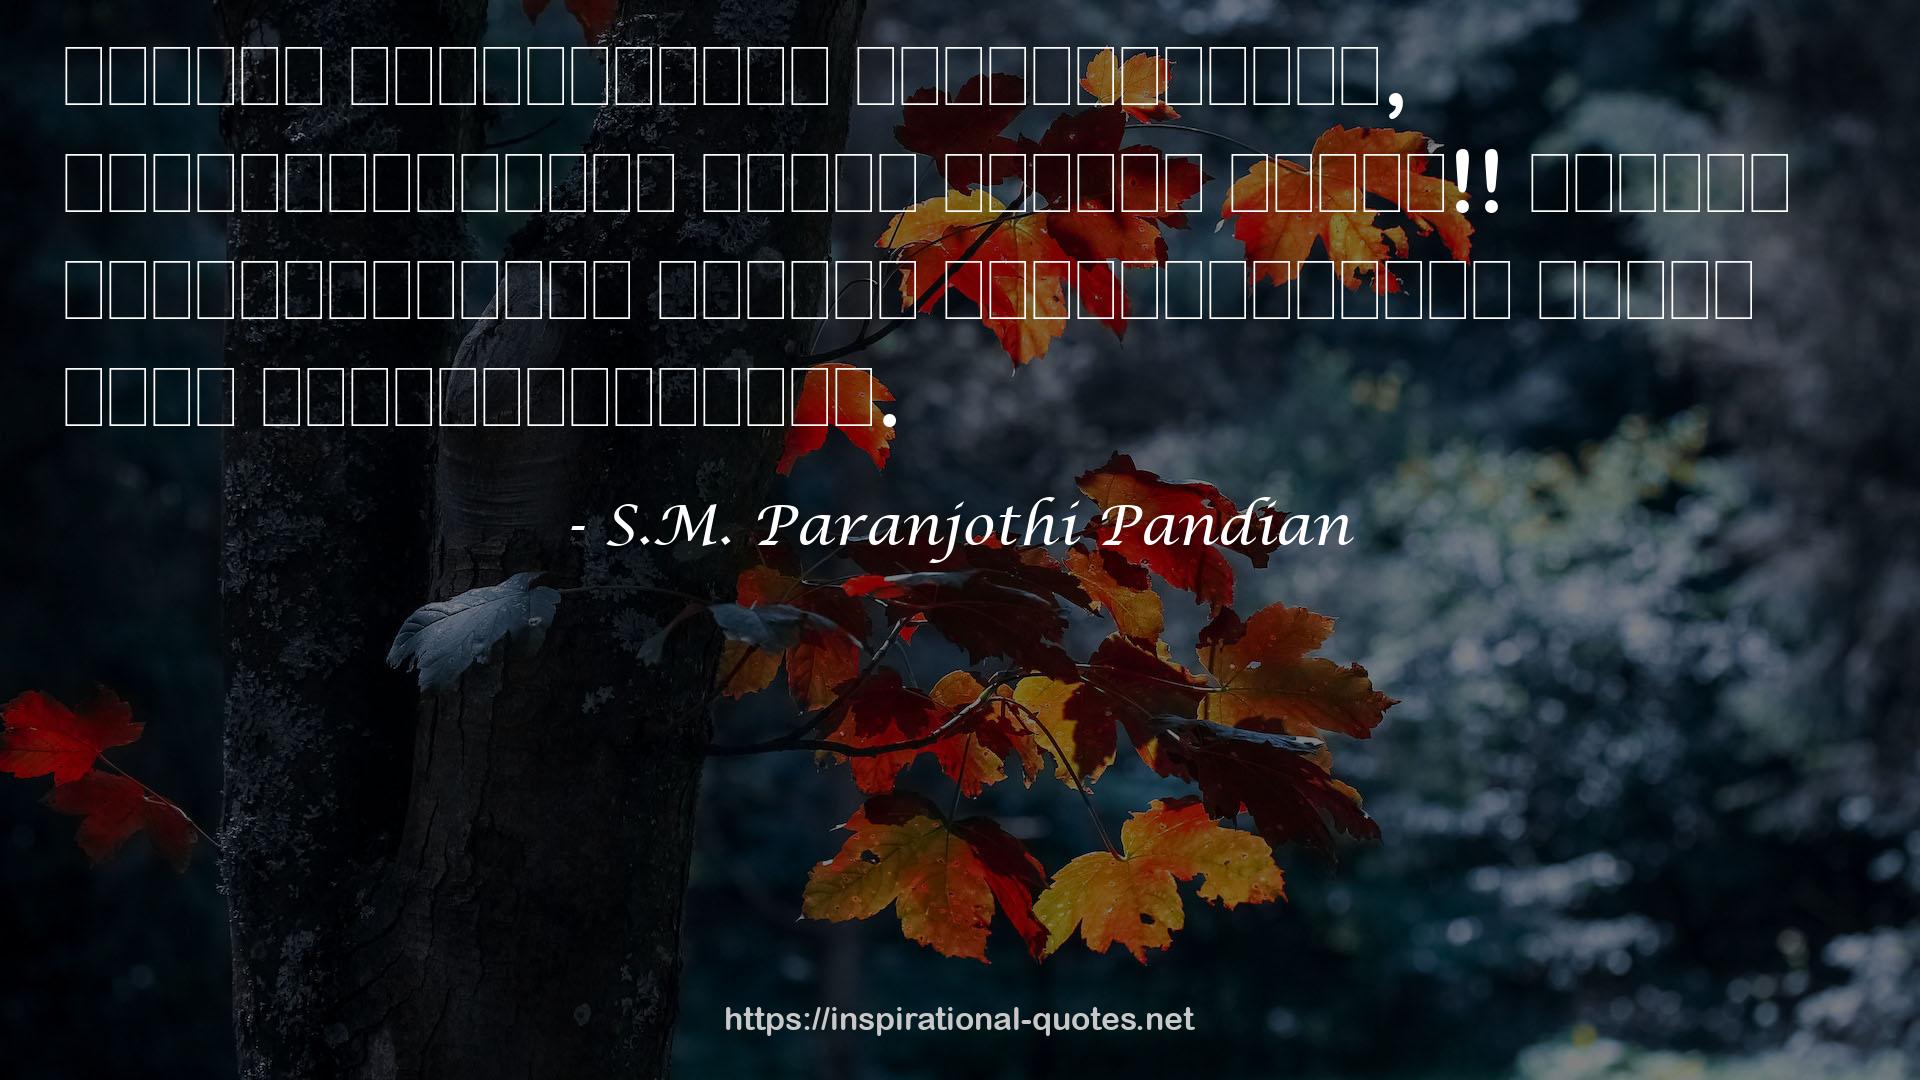 S.M. Paranjothi Pandian QUOTES